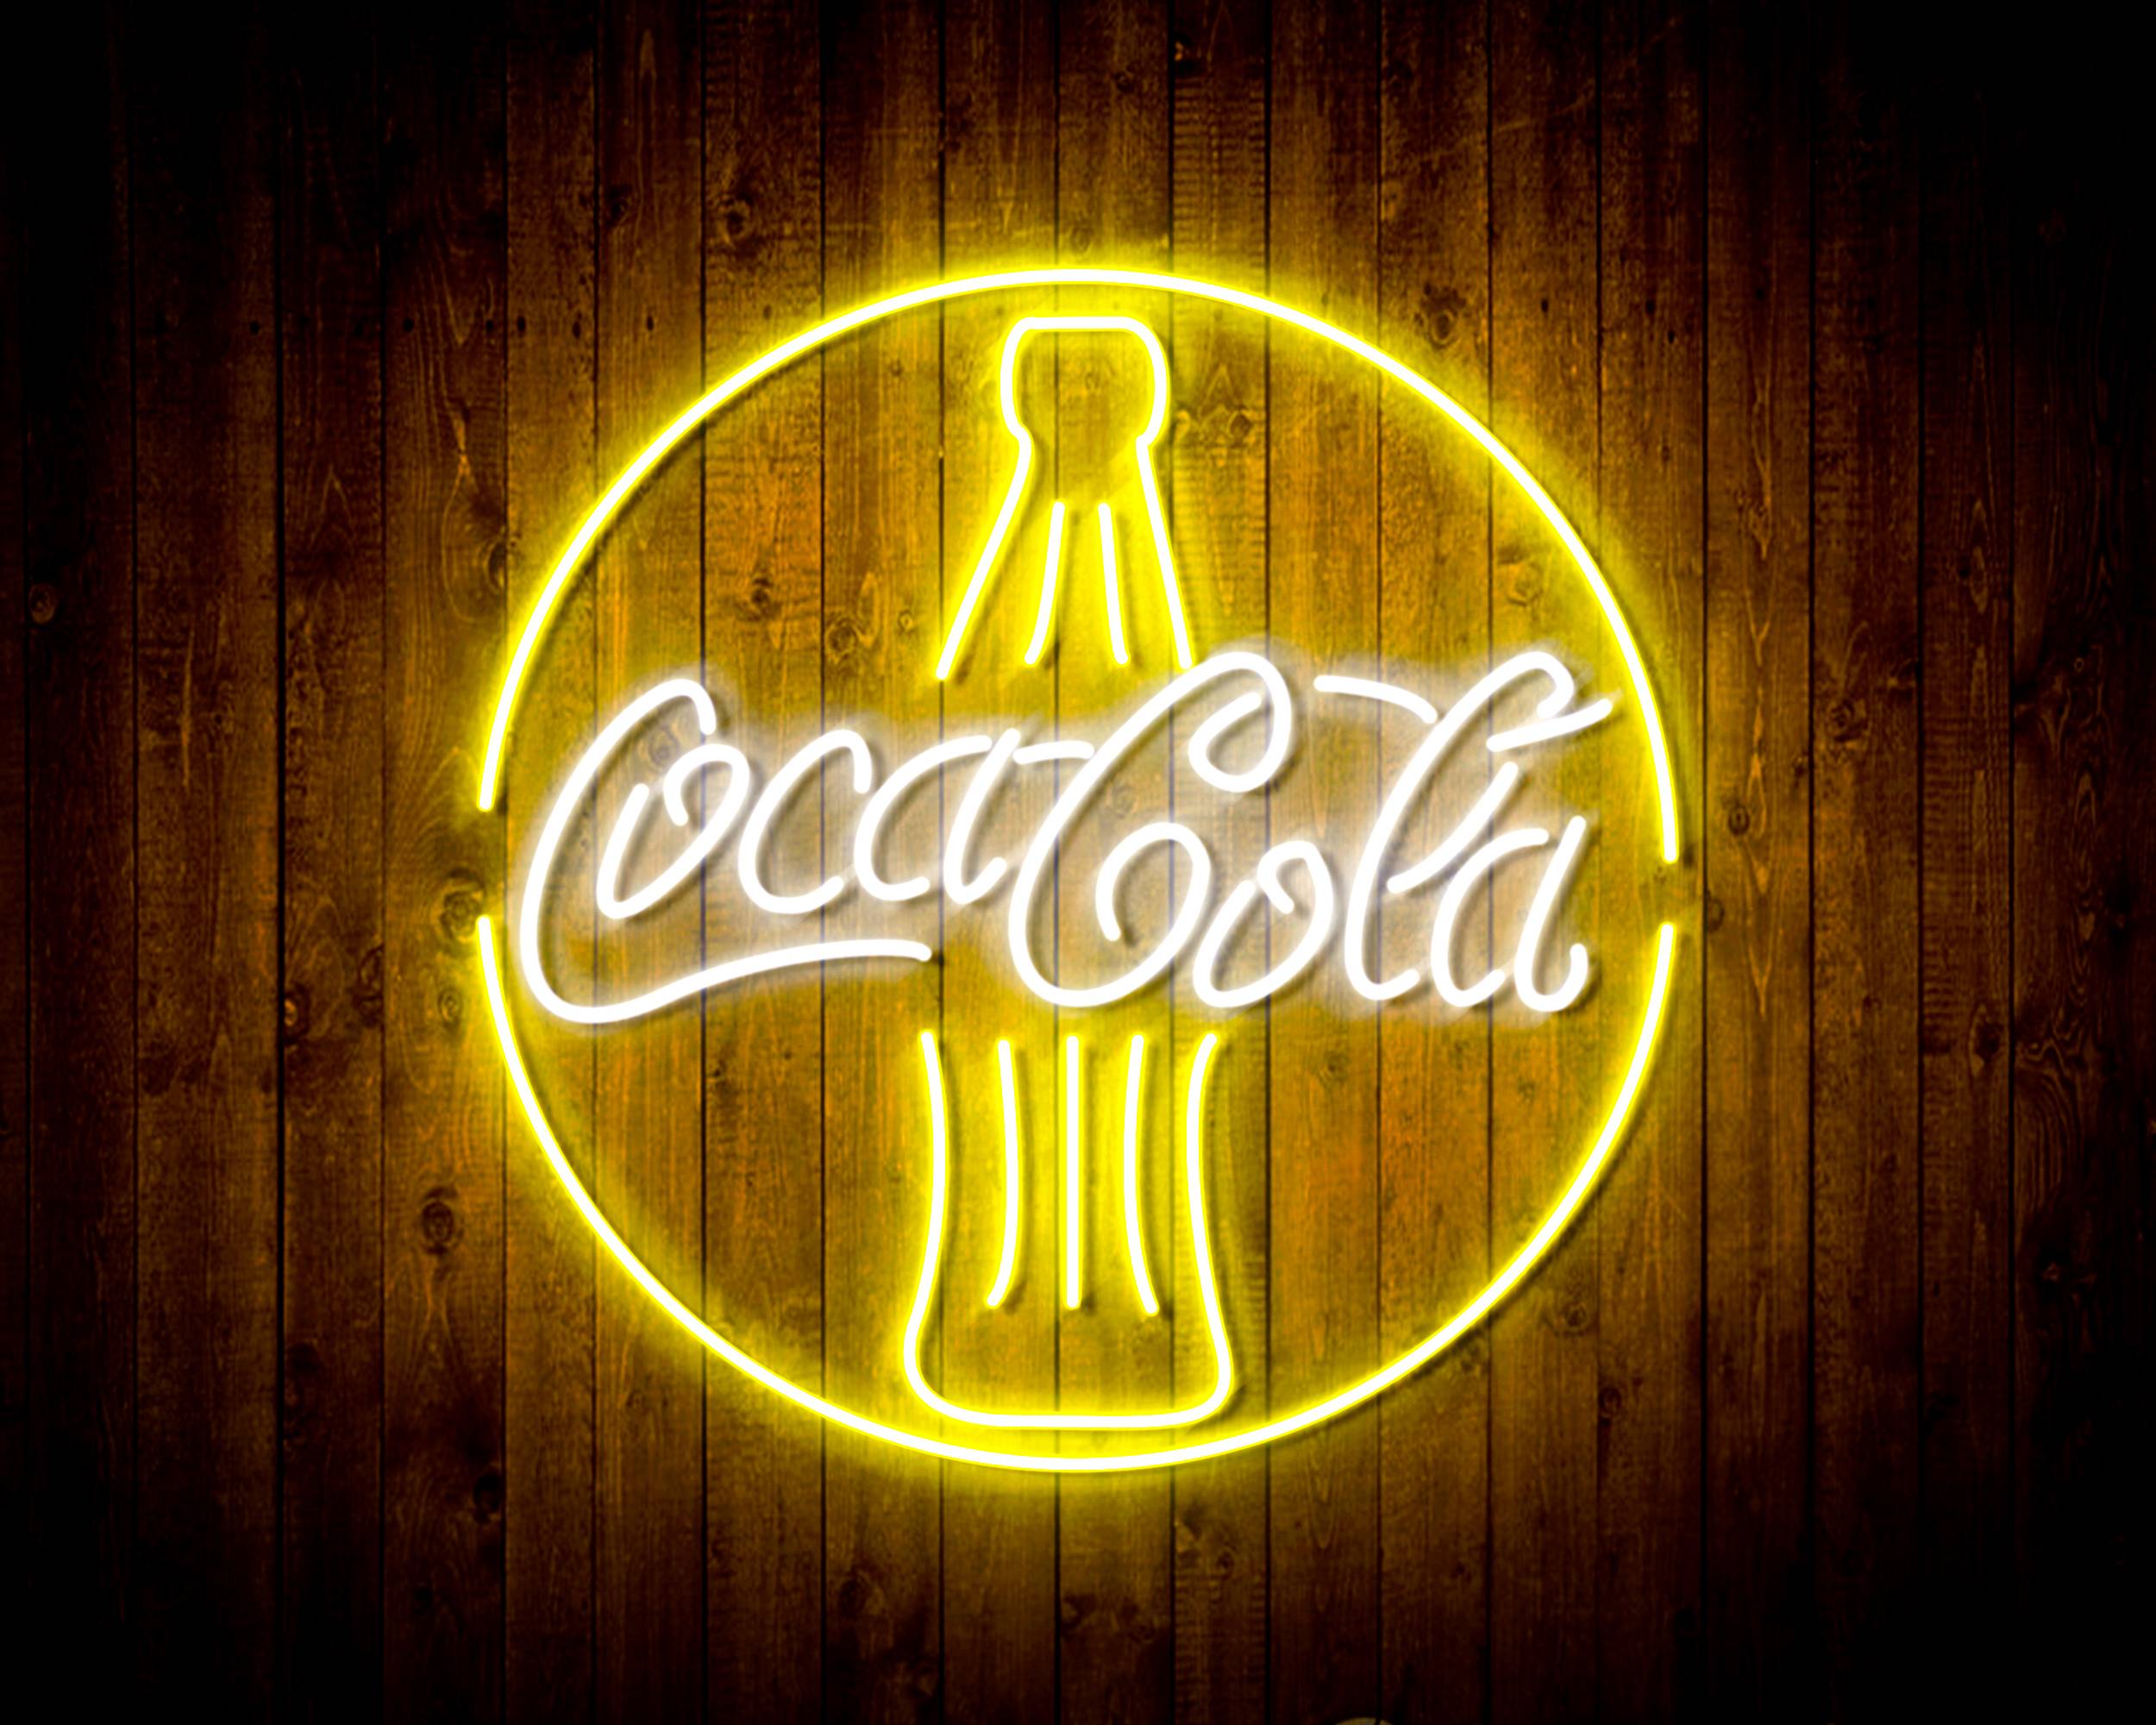 Coca-cola Bar Neon LED Sign